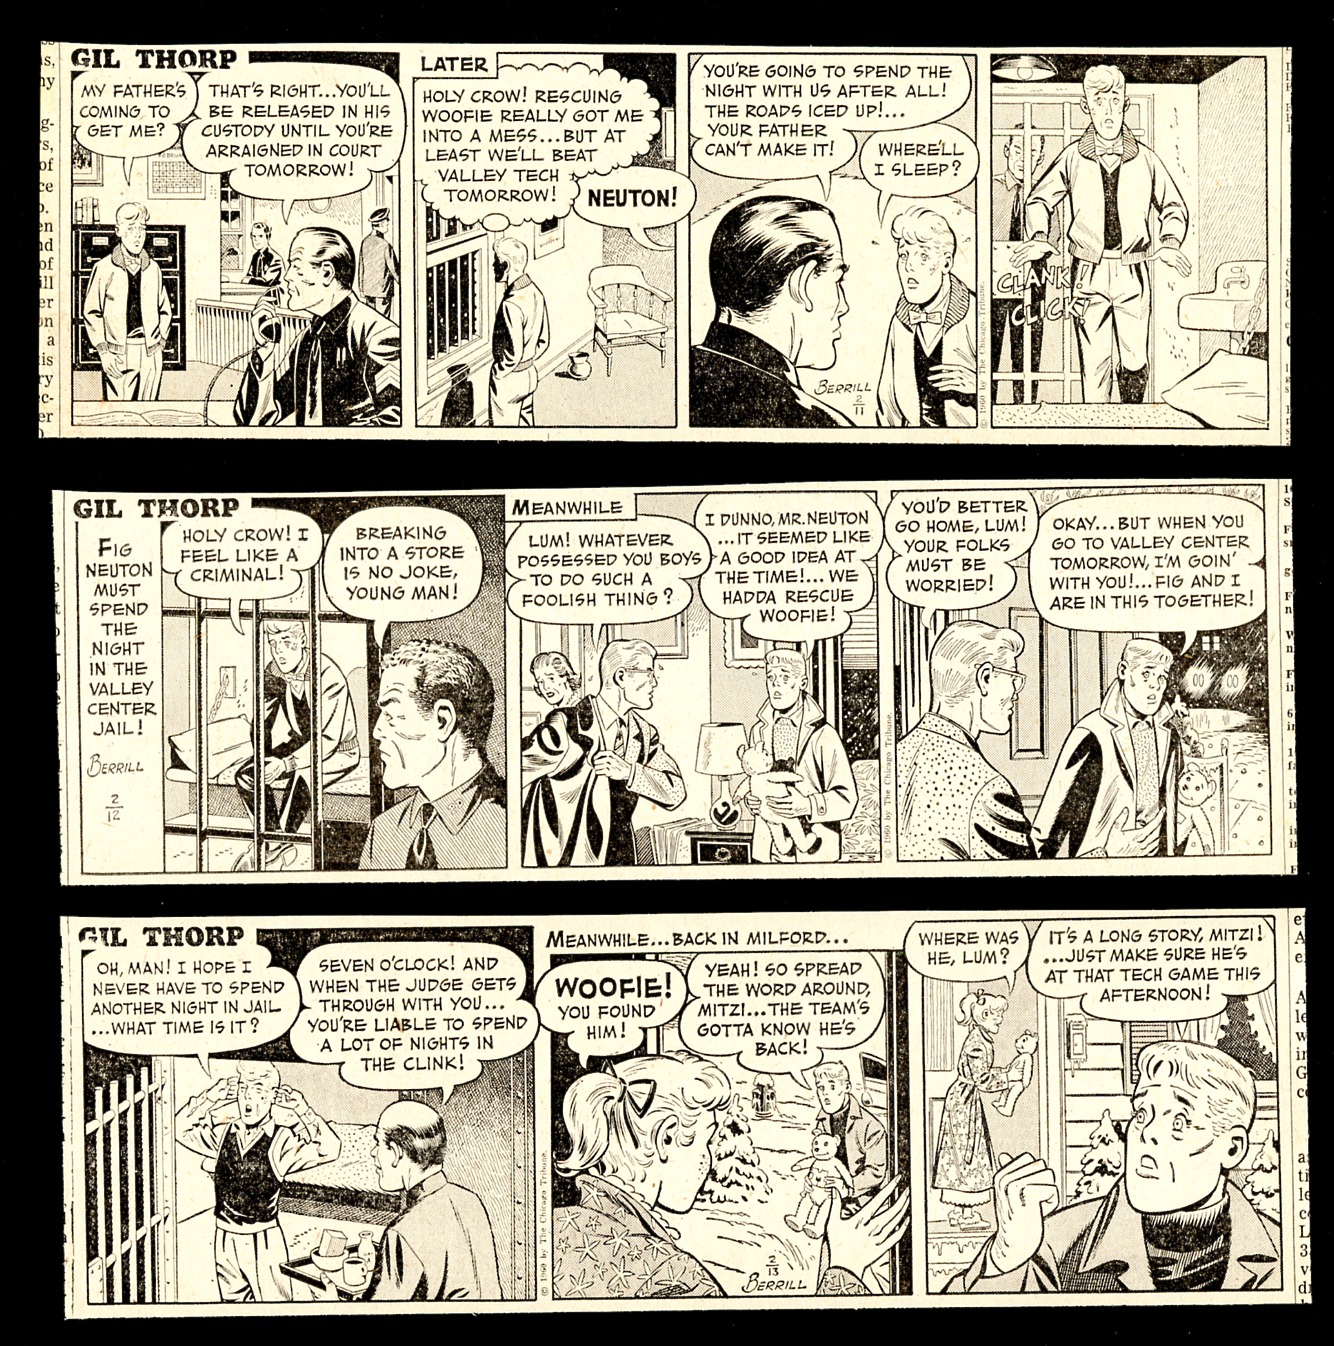 GIL THORP (1960) - 305+2 Daily Comics - by JACK BERRILL | eBay